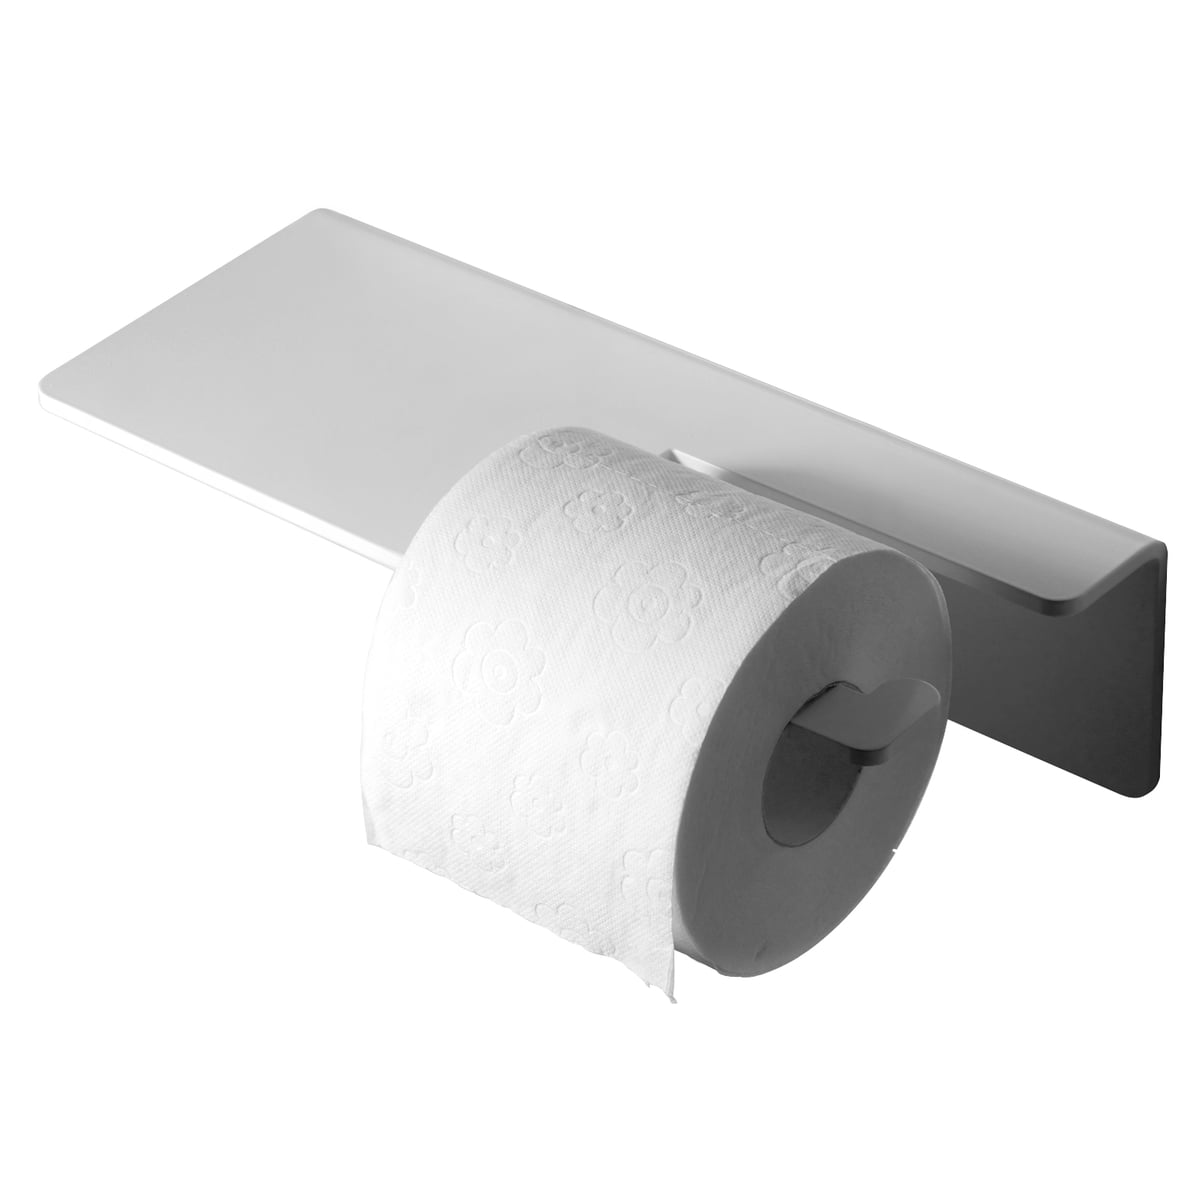 Stainless Steel Toilet Paper Holders 